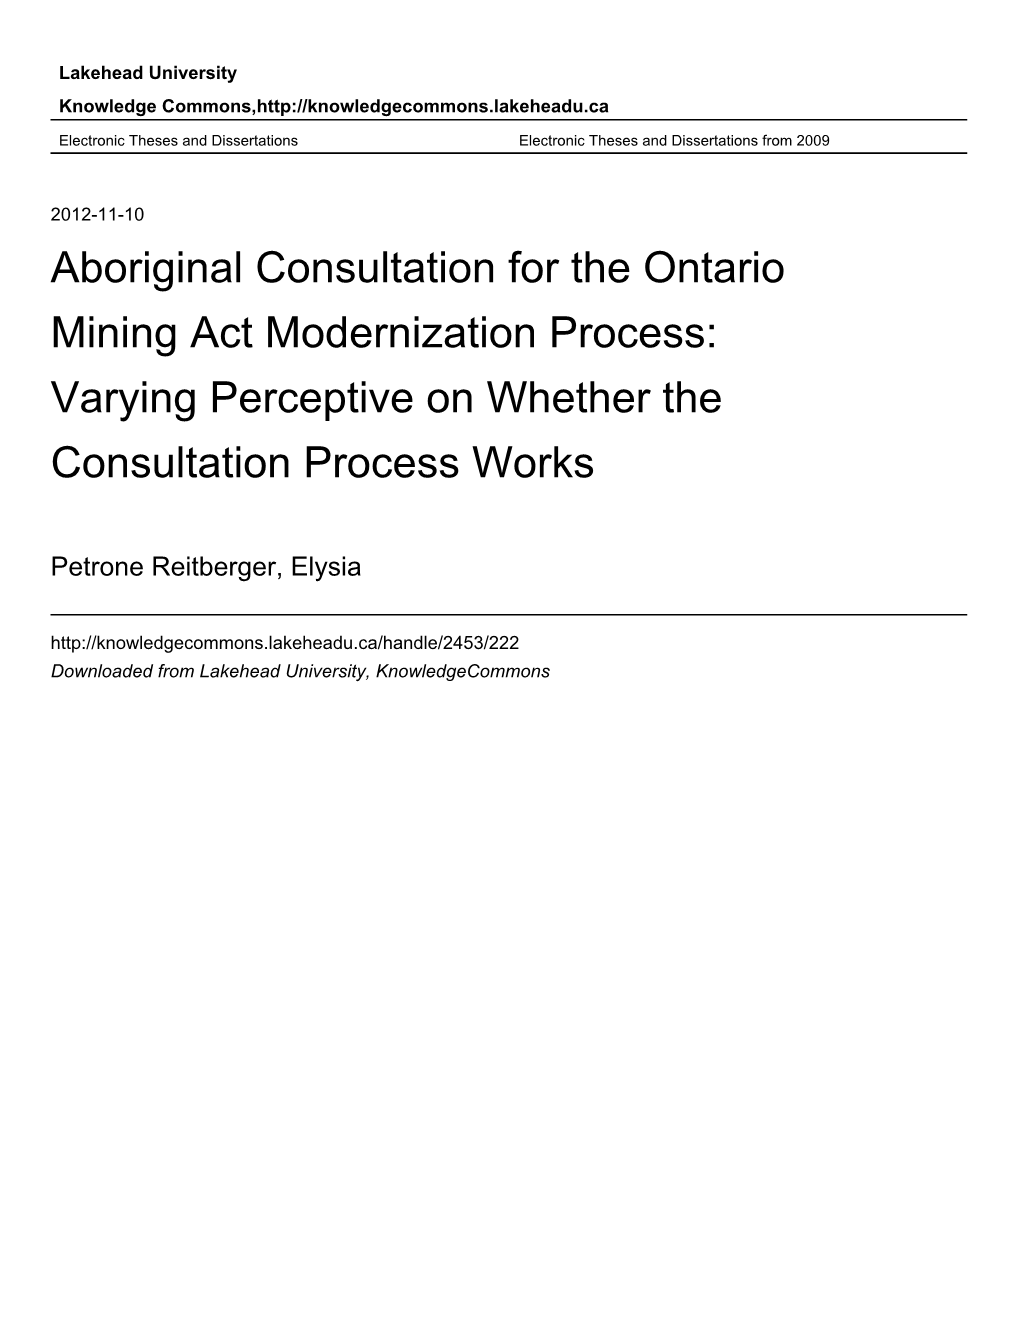 Aboriginal Consultation for the Ontario Mining Act Modernization Process: Varying Perceptive on Whether the Consultation Process Works